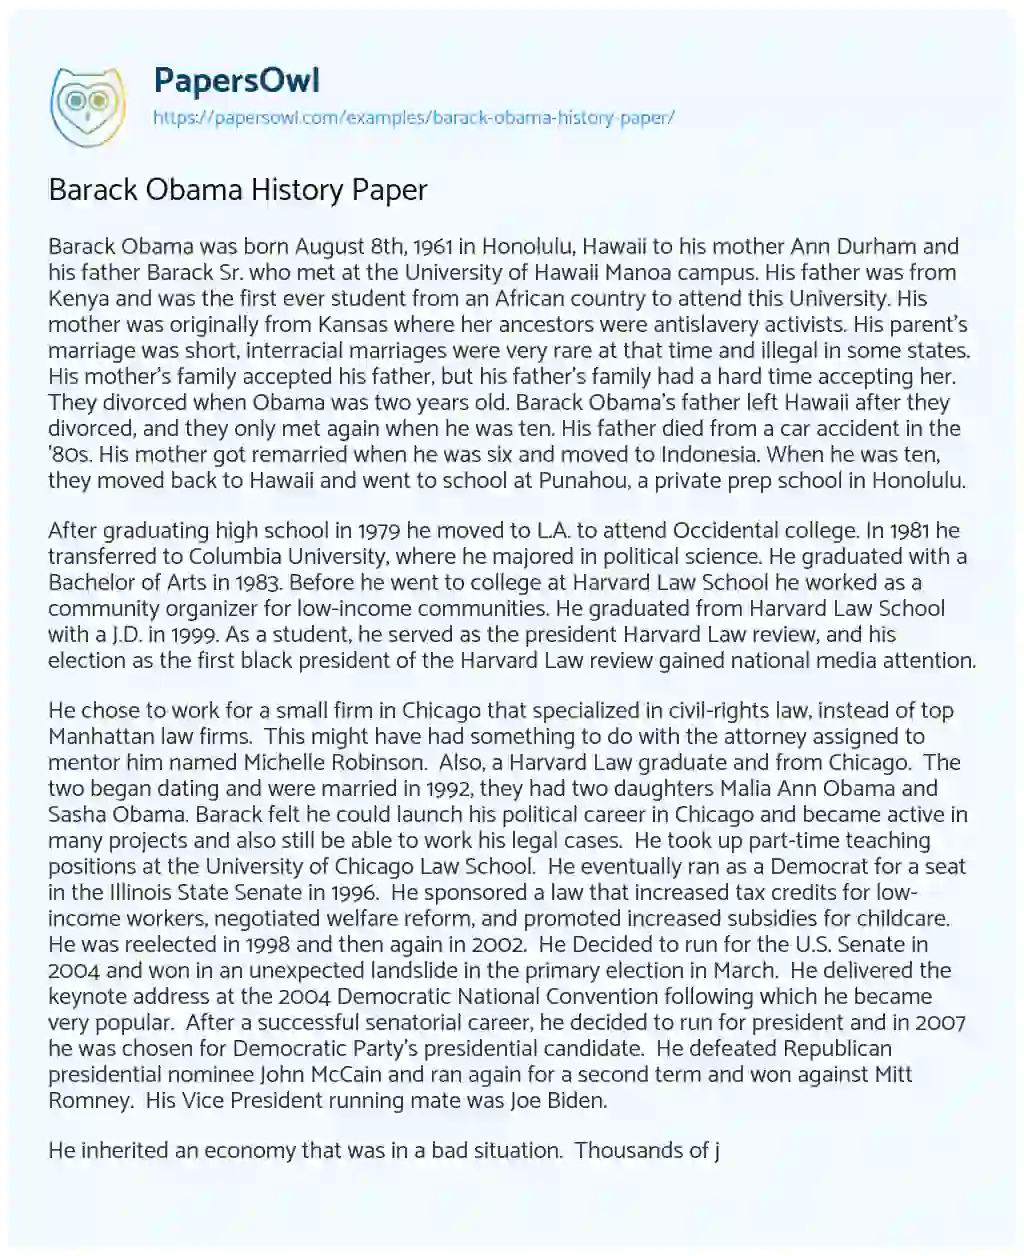 Essay on Barack Obama History Paper